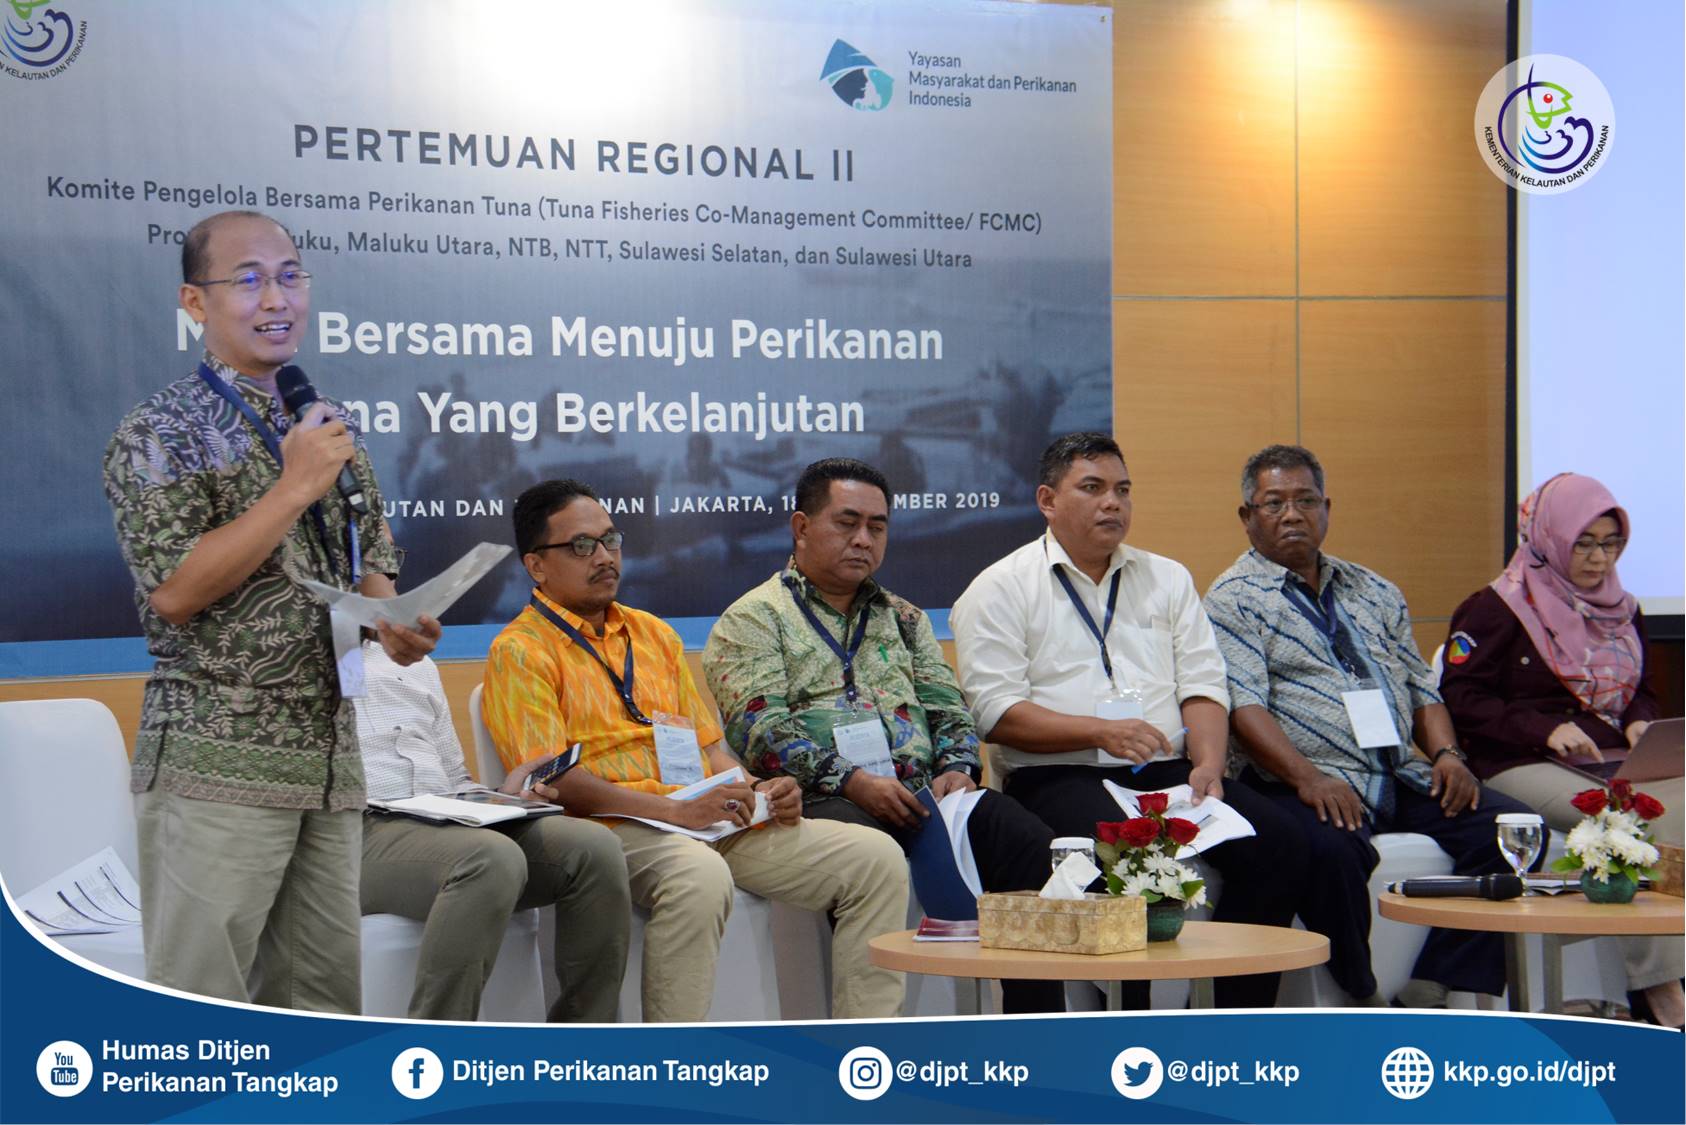 DJPT KKP - MDPI Gelar Pertemuan Regional Kedua Bahas Tata Kelola Perikanan Tuna